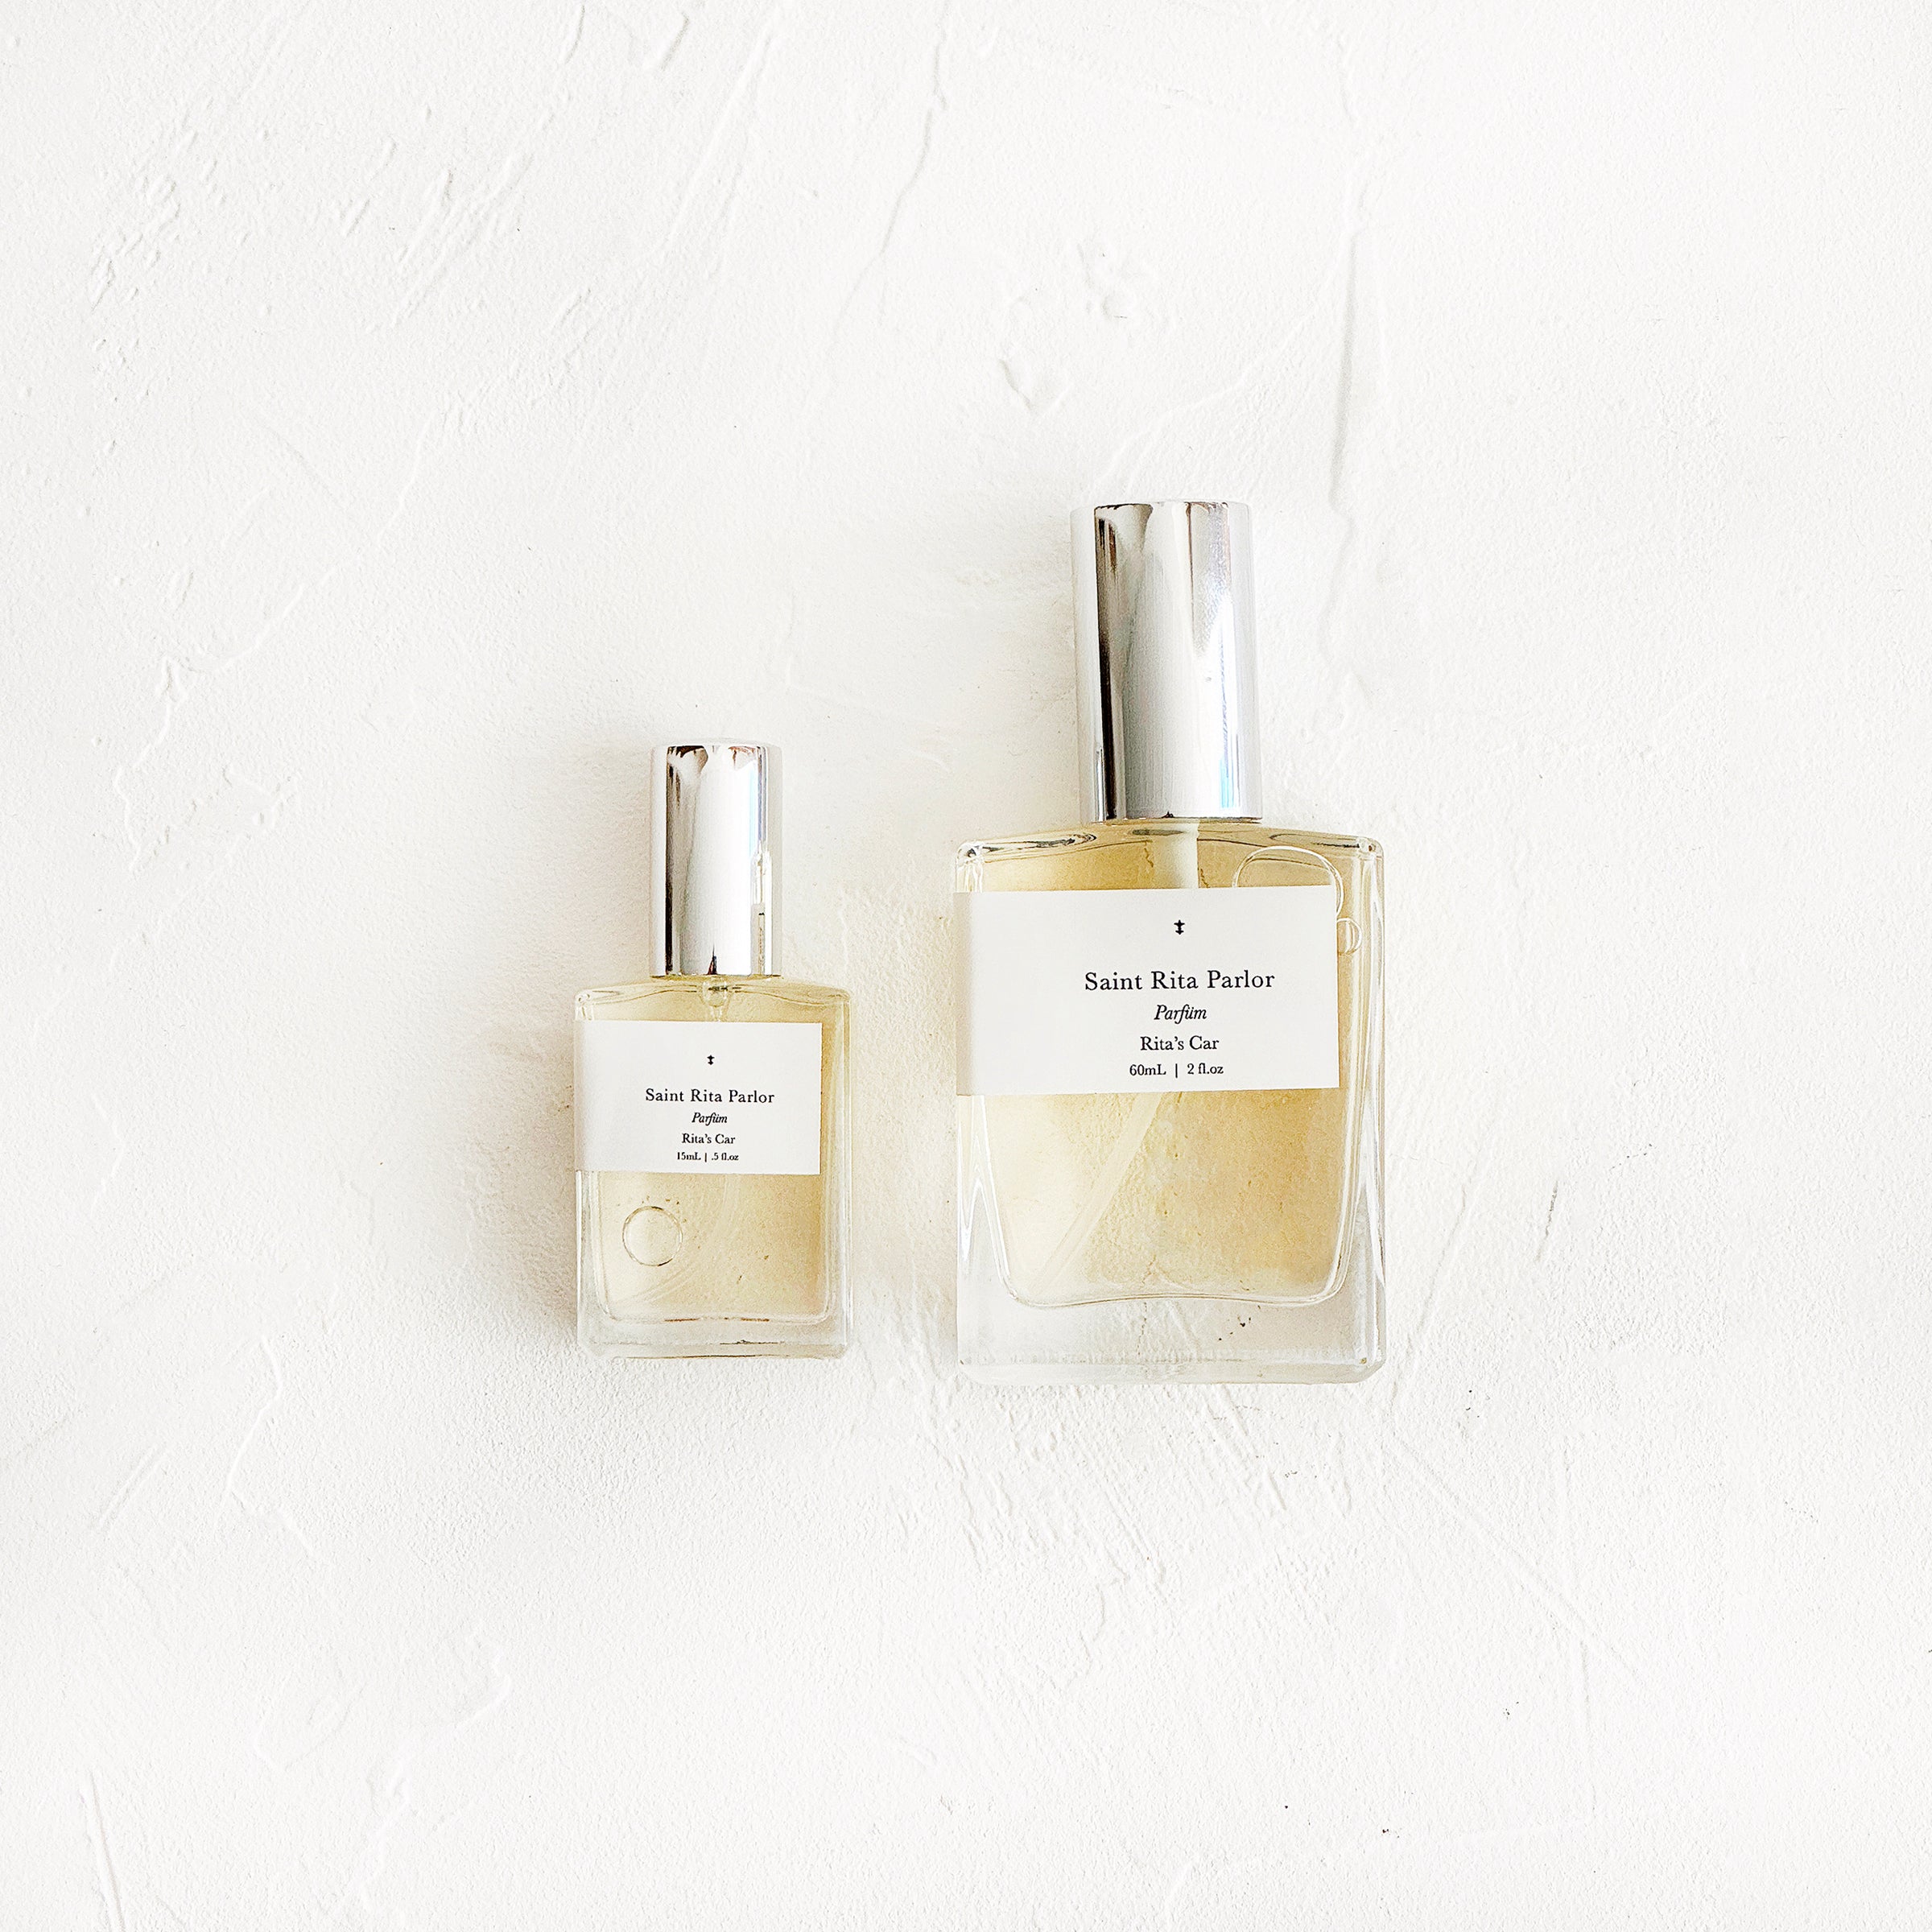 Saint Rita Parlor - Parfum | Rita's Car Fragrance | 5 mL